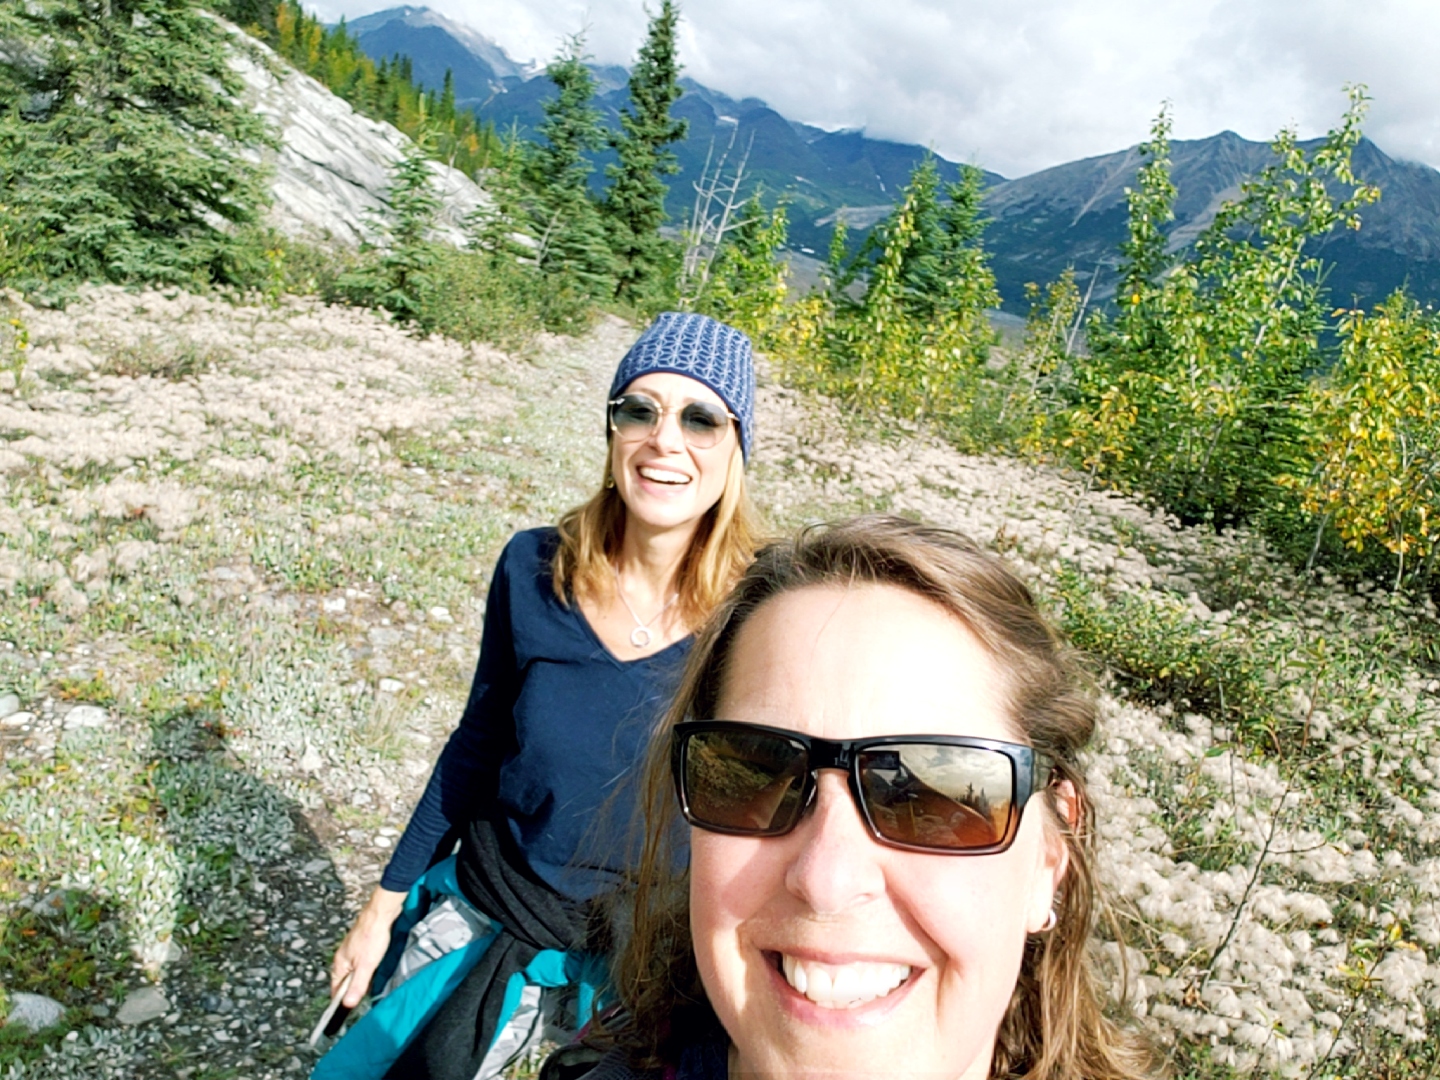  My Roadside Potatohead Co-Founder Kathleen Heinle and I hiking the West Side Glacier Trail 